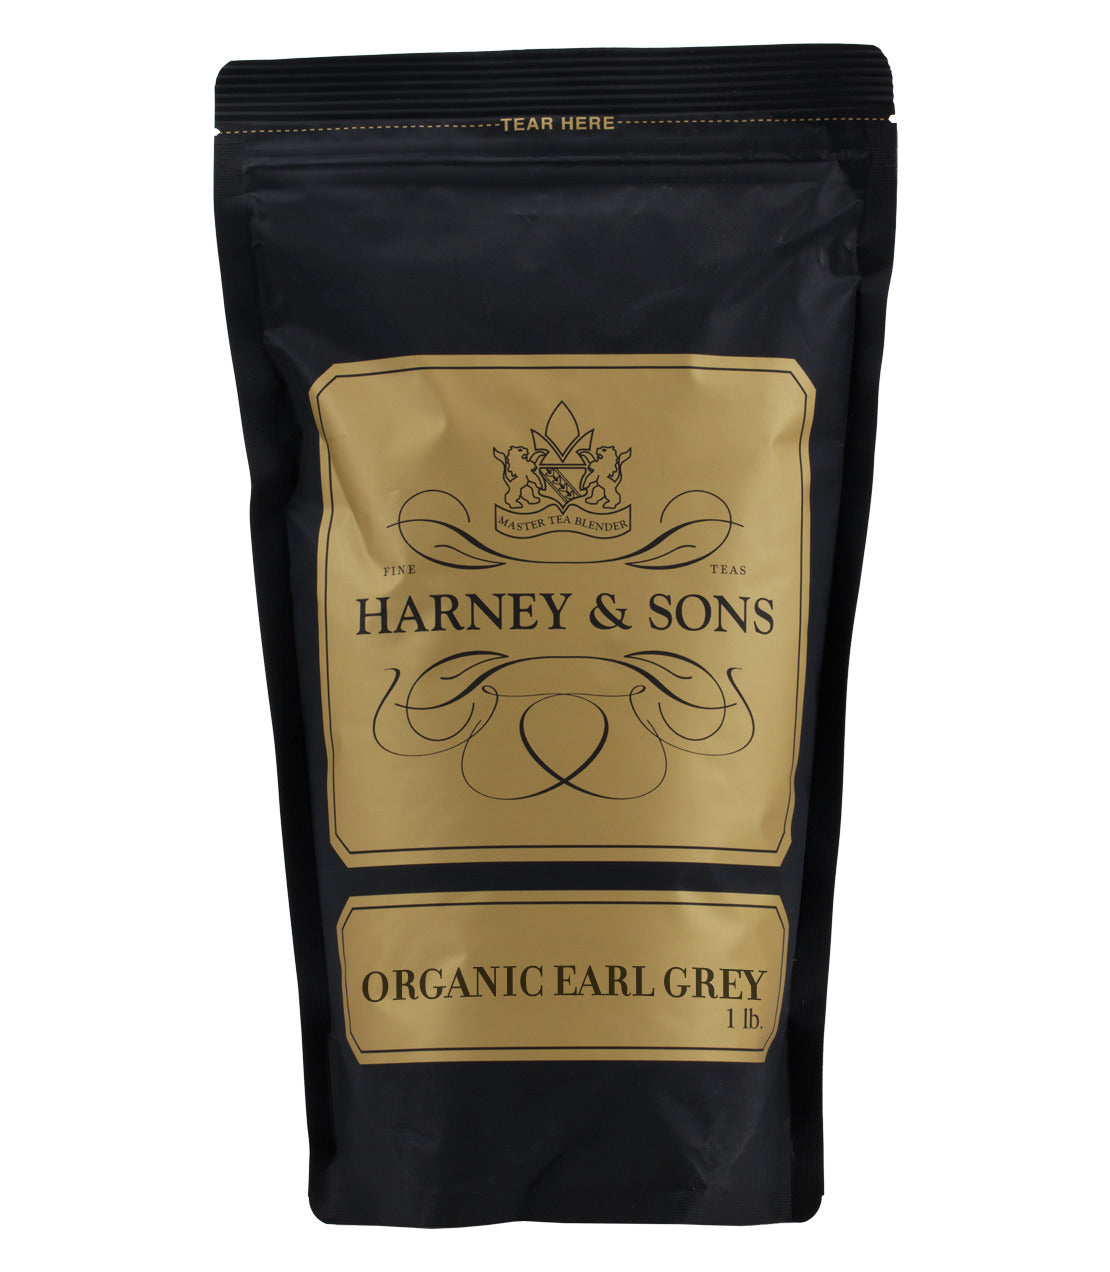 Organic Earl Grey - Loose 1 lb. Bag - Harney & Sons Fine Teas